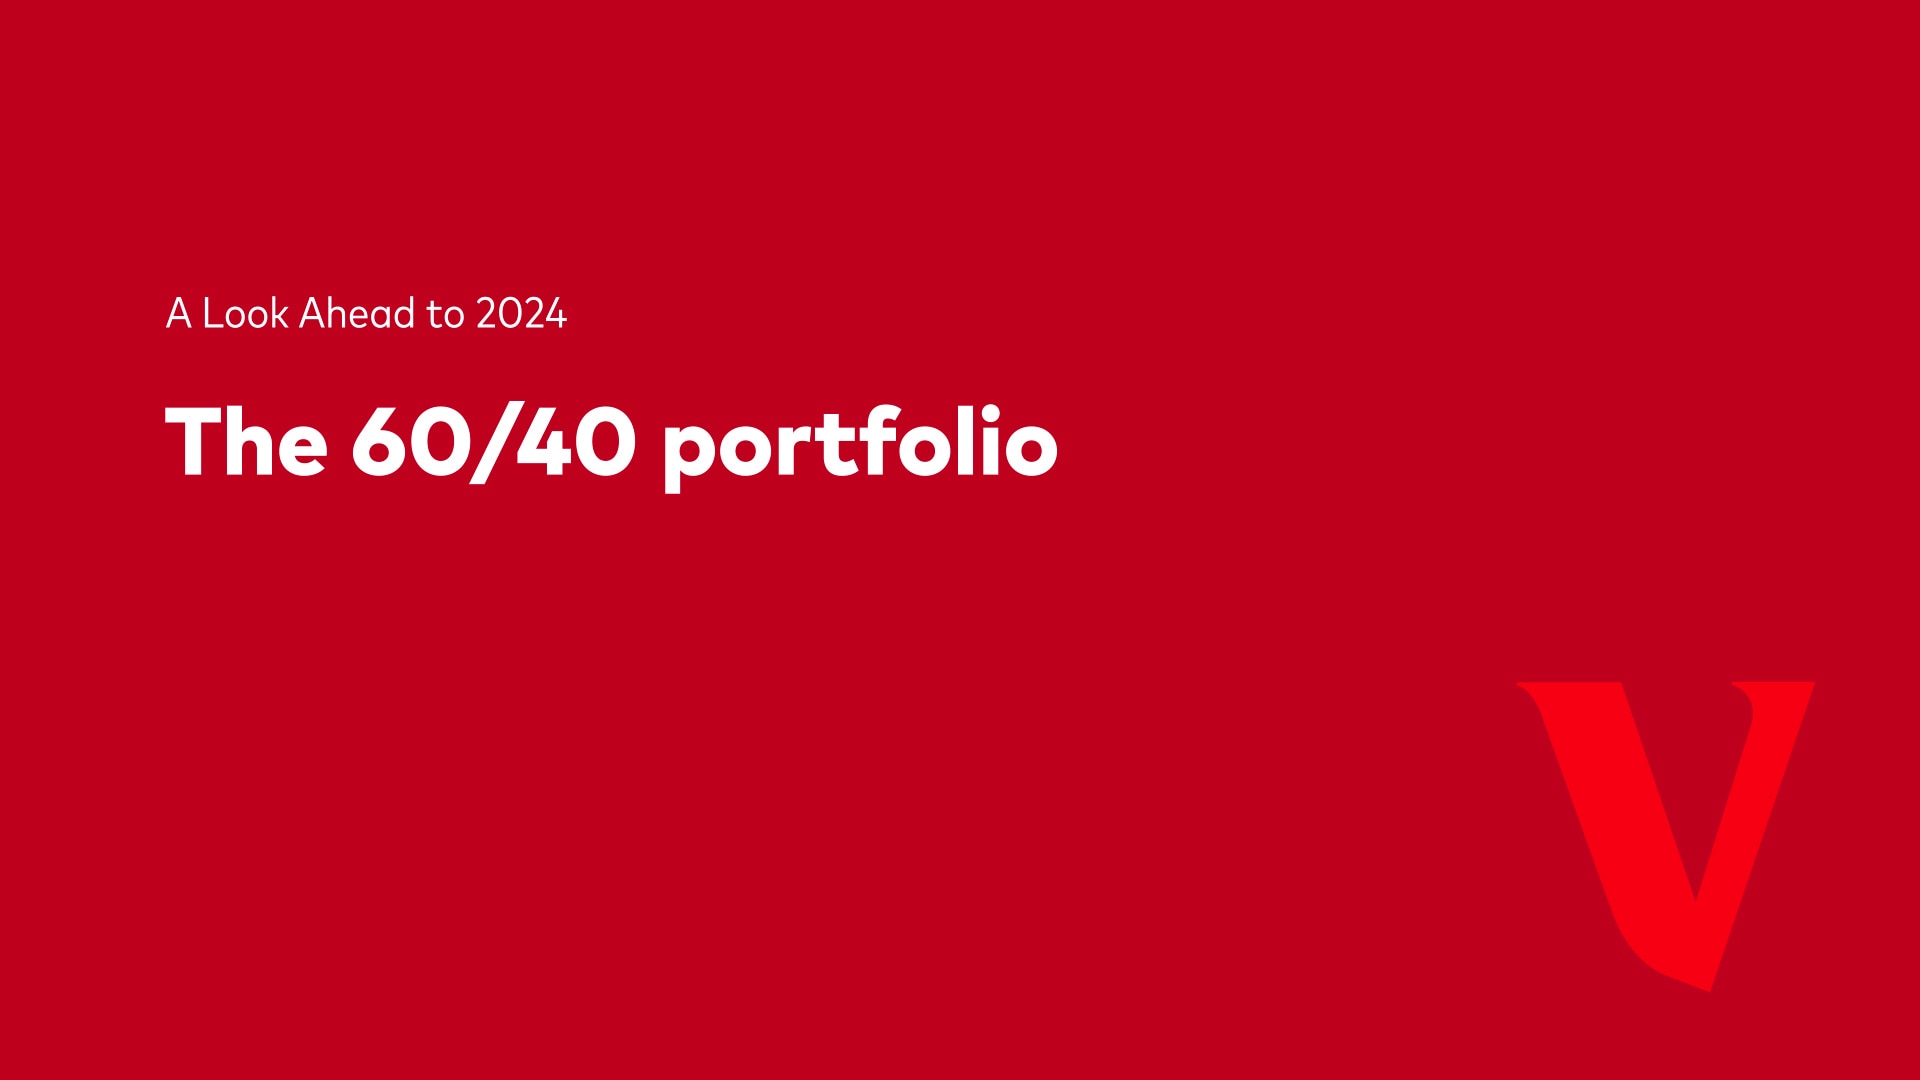 A Look Ahead 2024: The 60/40 portfolio